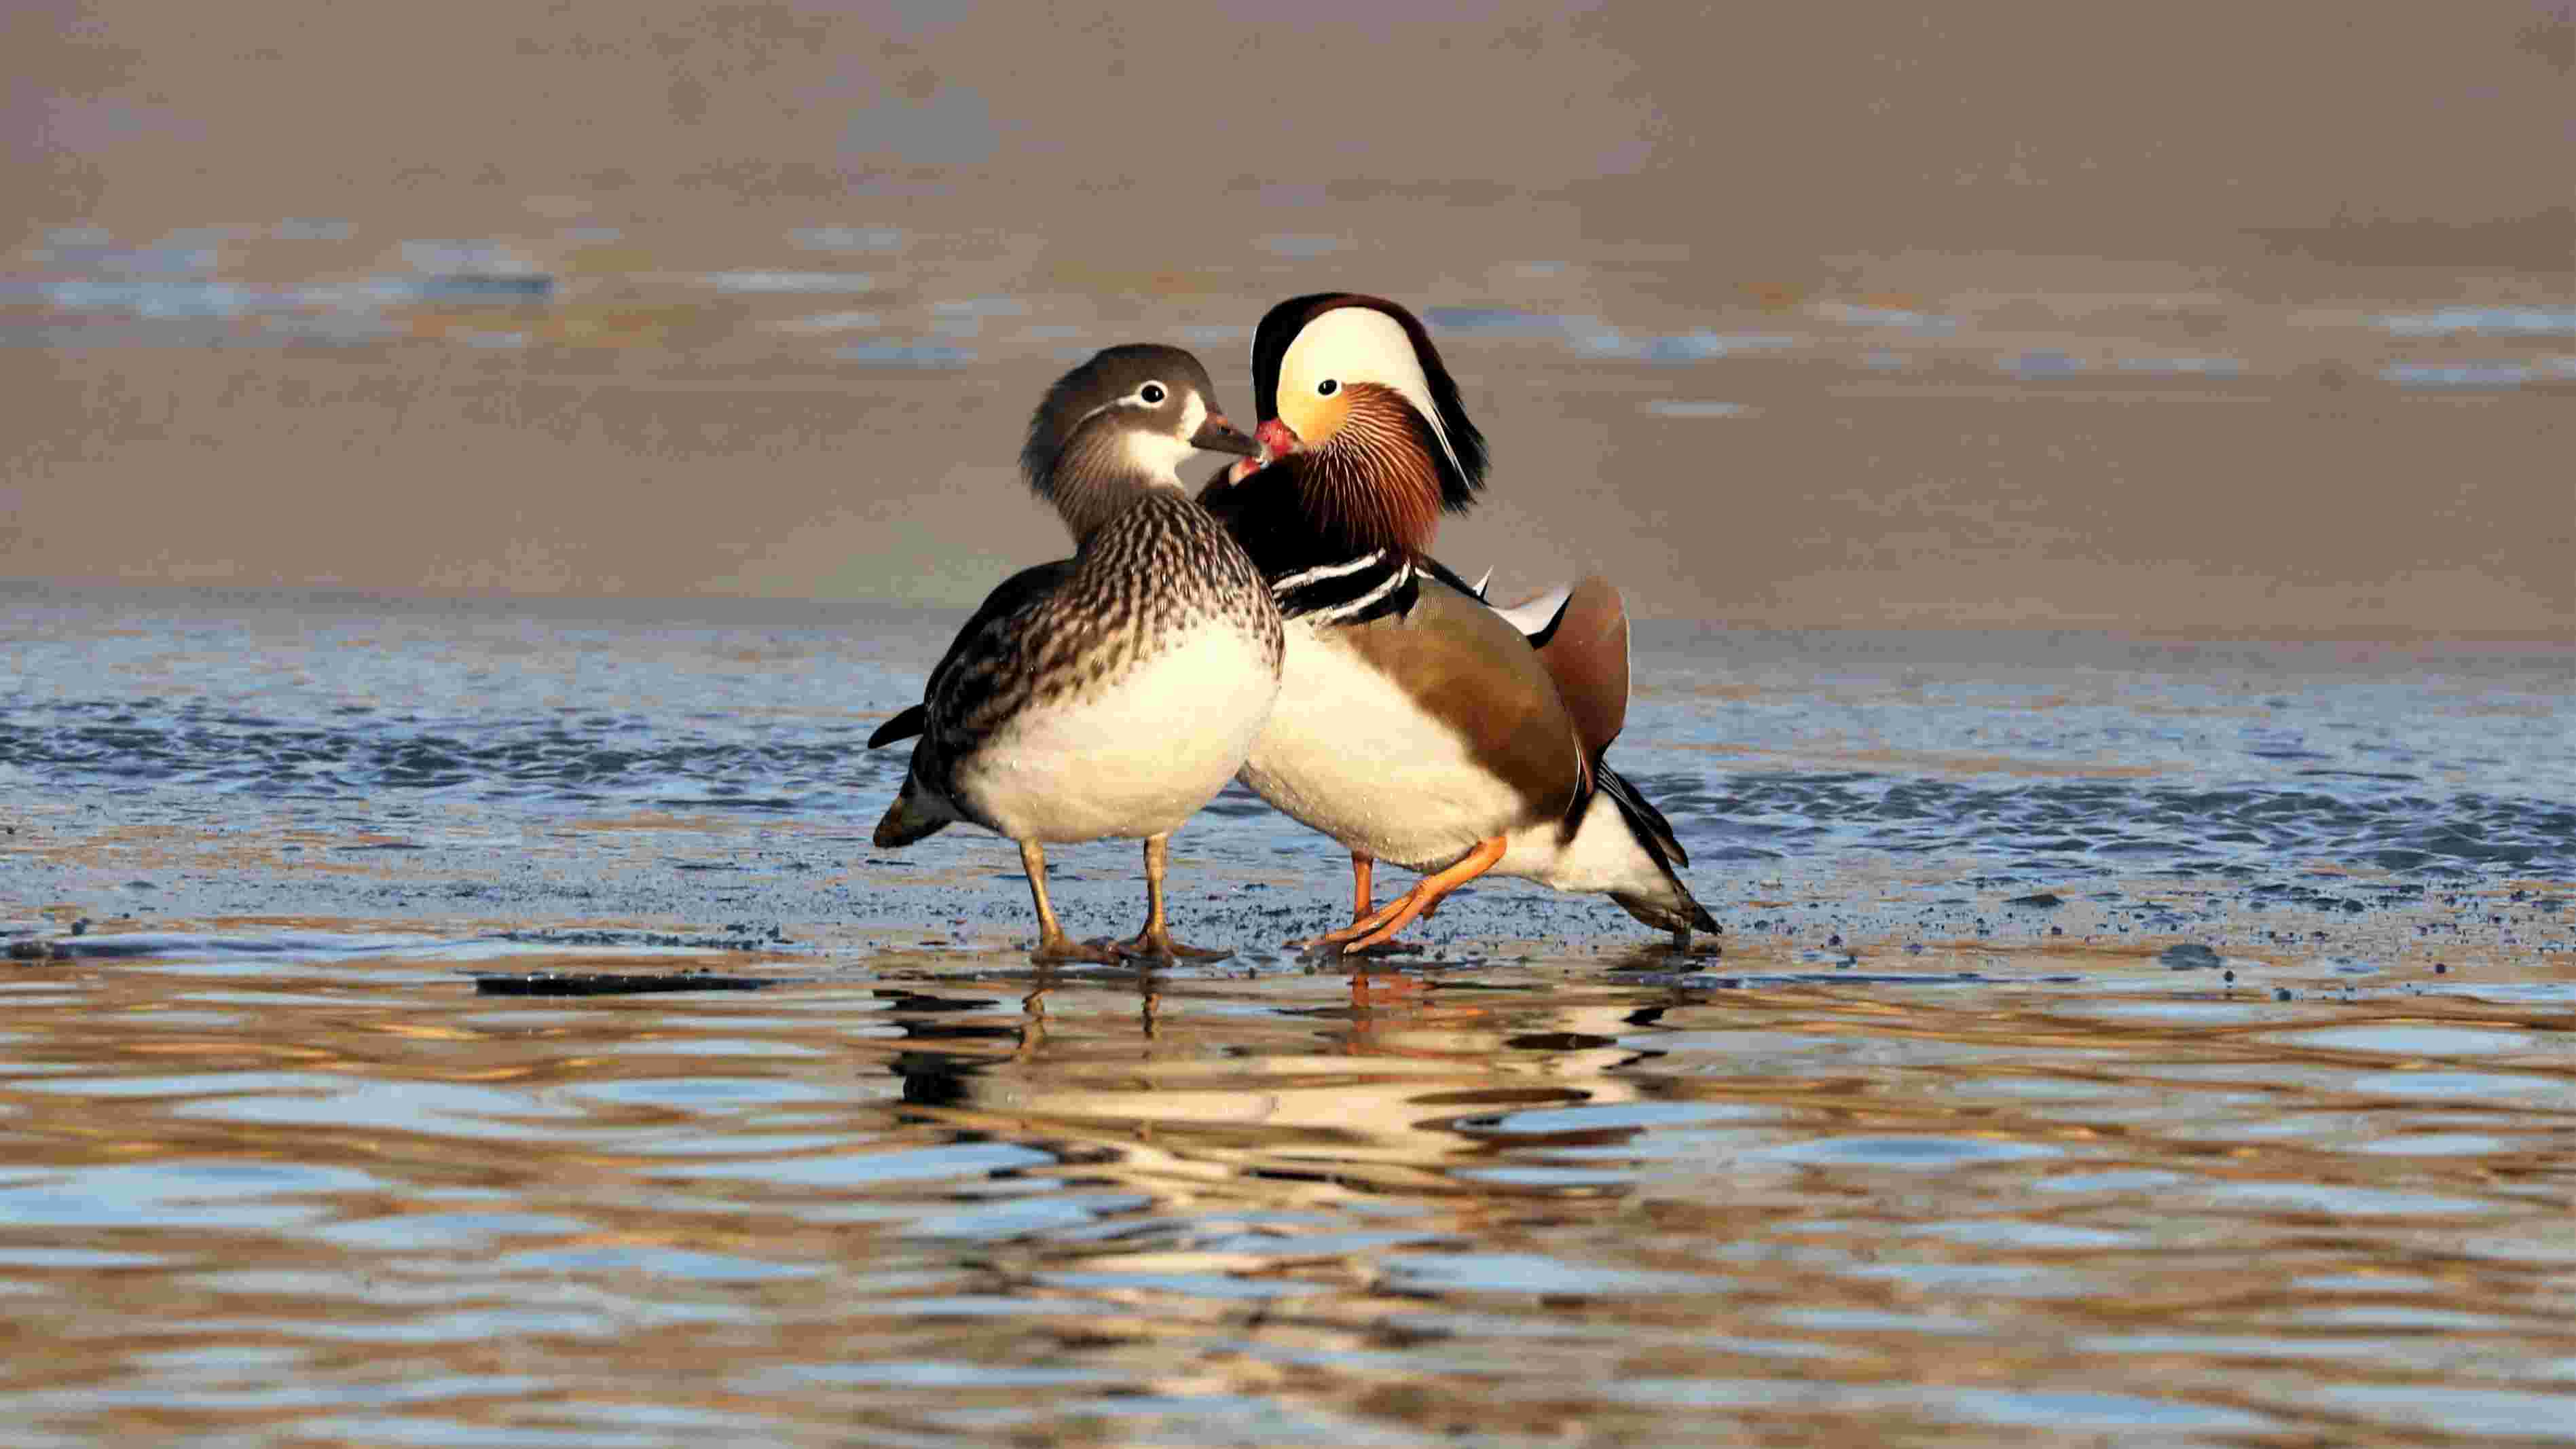 Mandarin Duck Pictures  Download Free Images on Unsplash